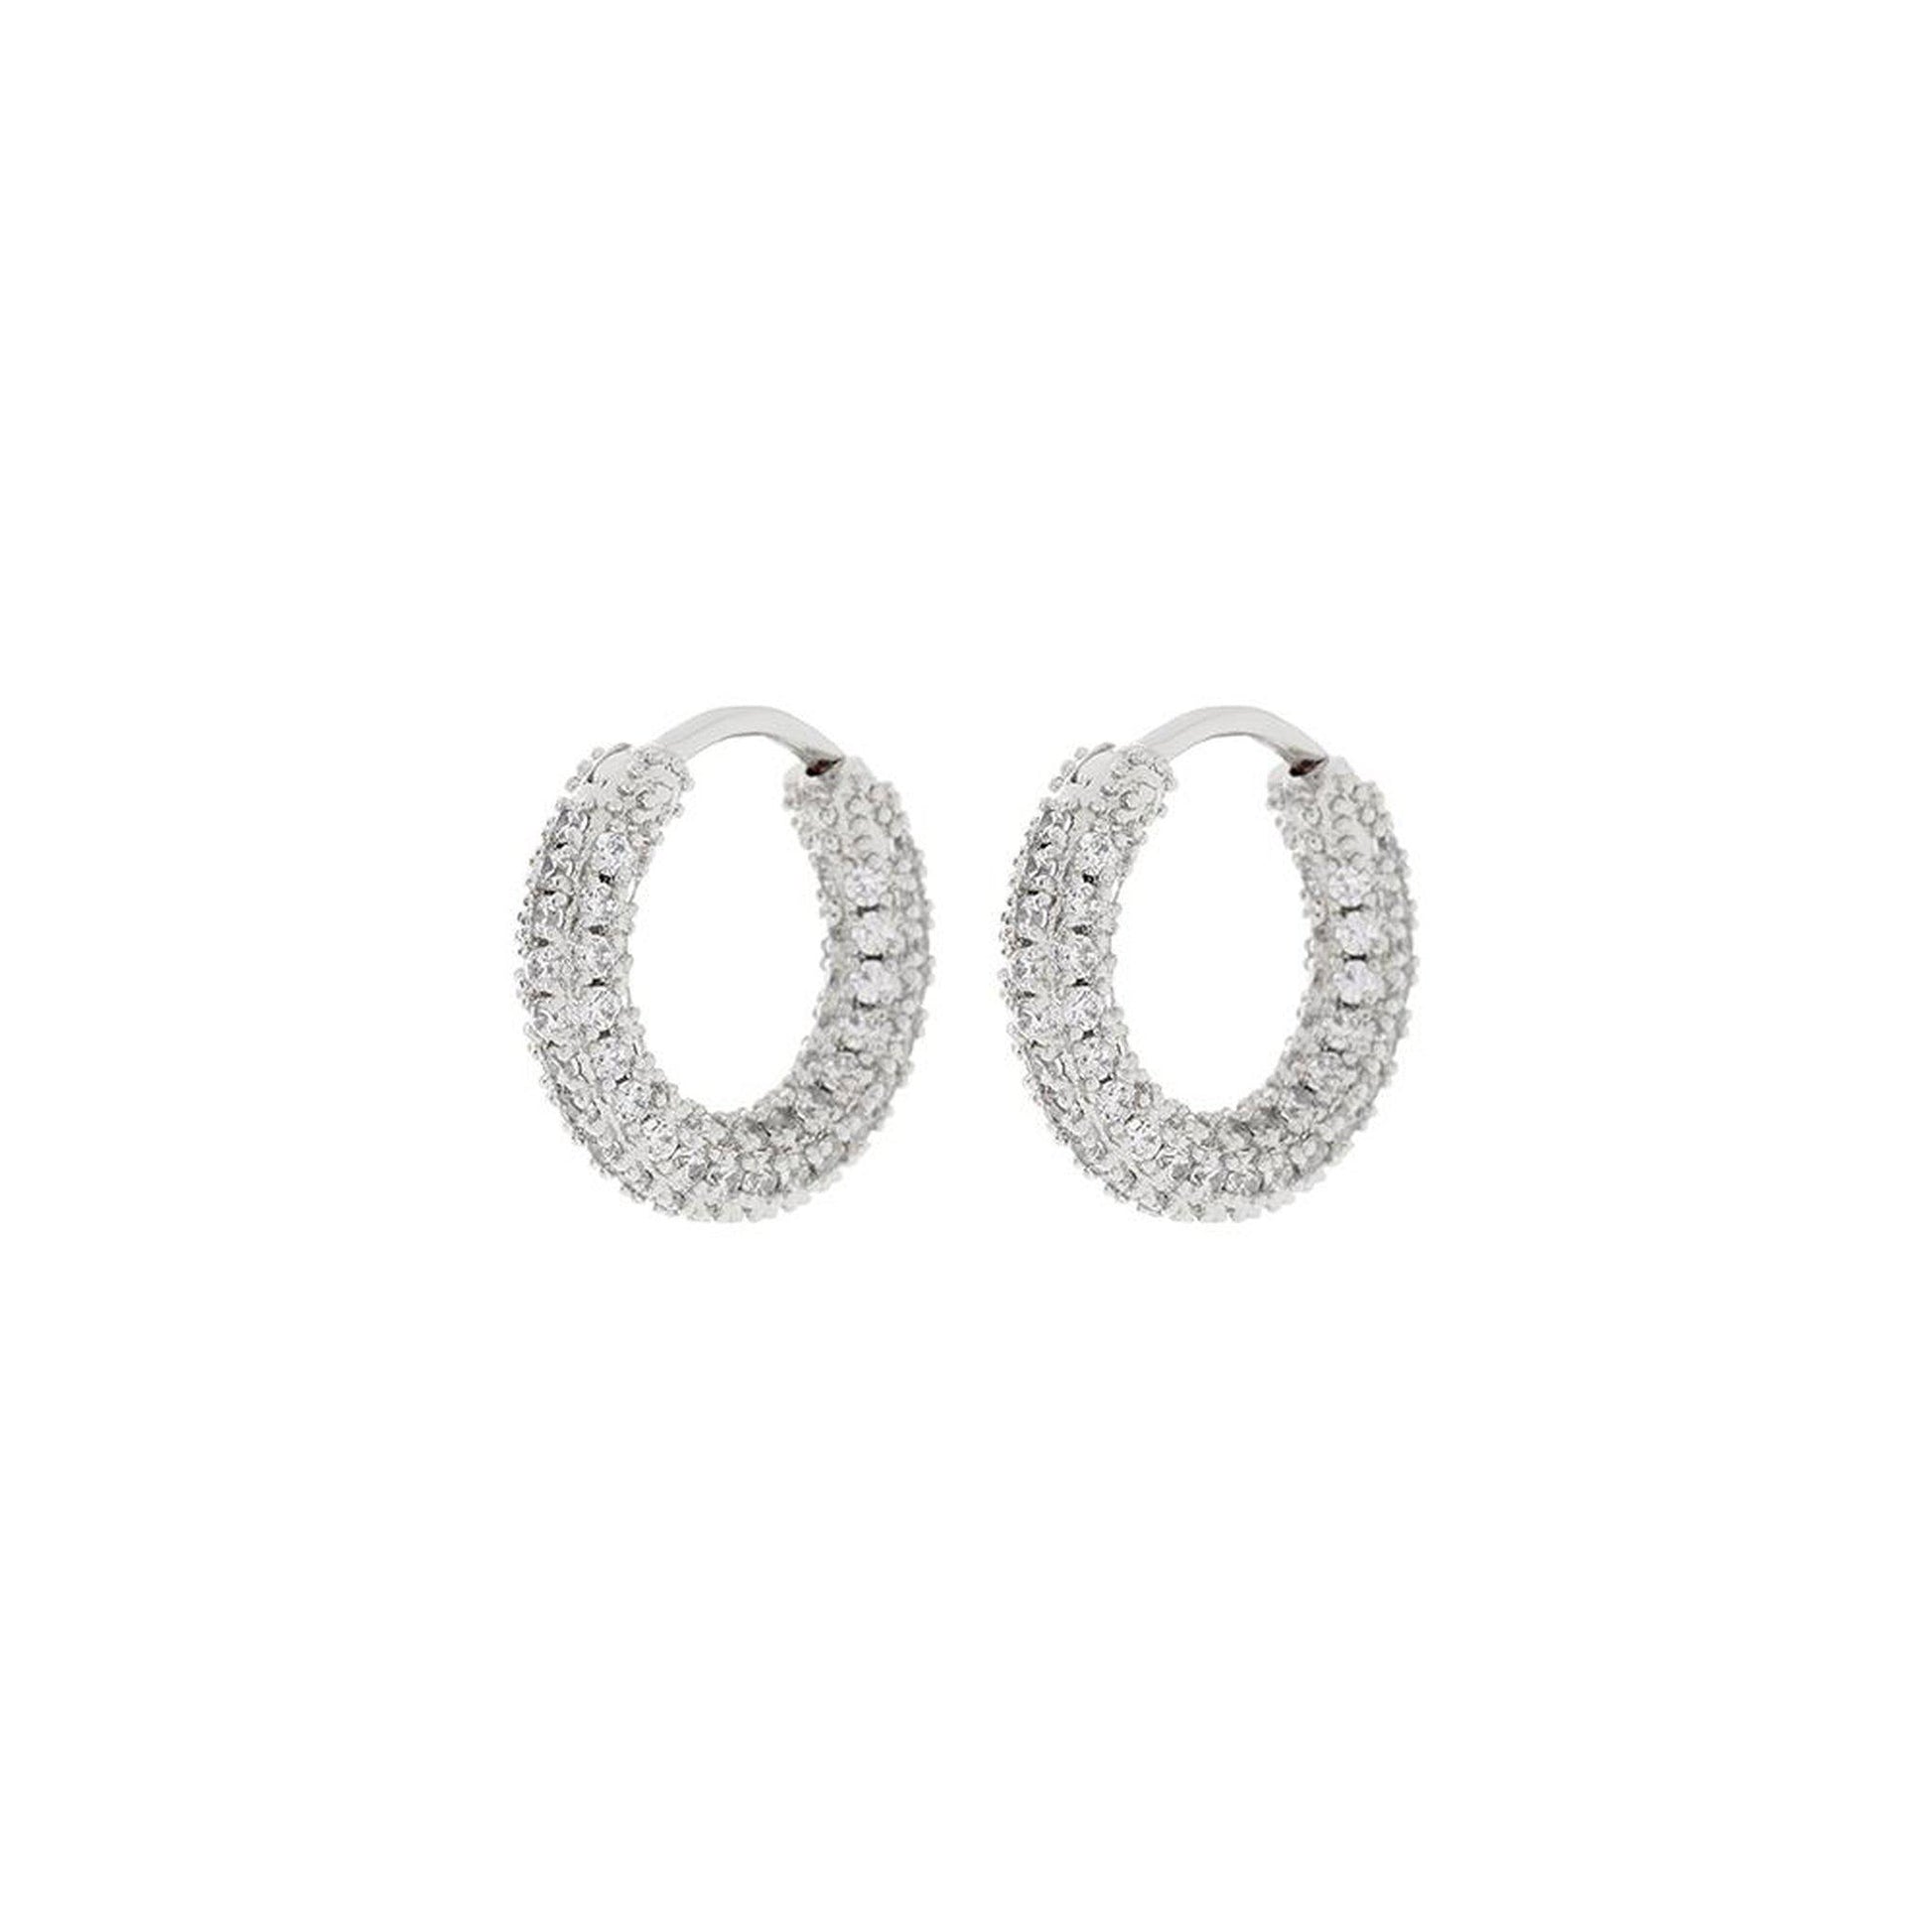 Pave Amalfi Huggies hoop earrings in Silver on white background